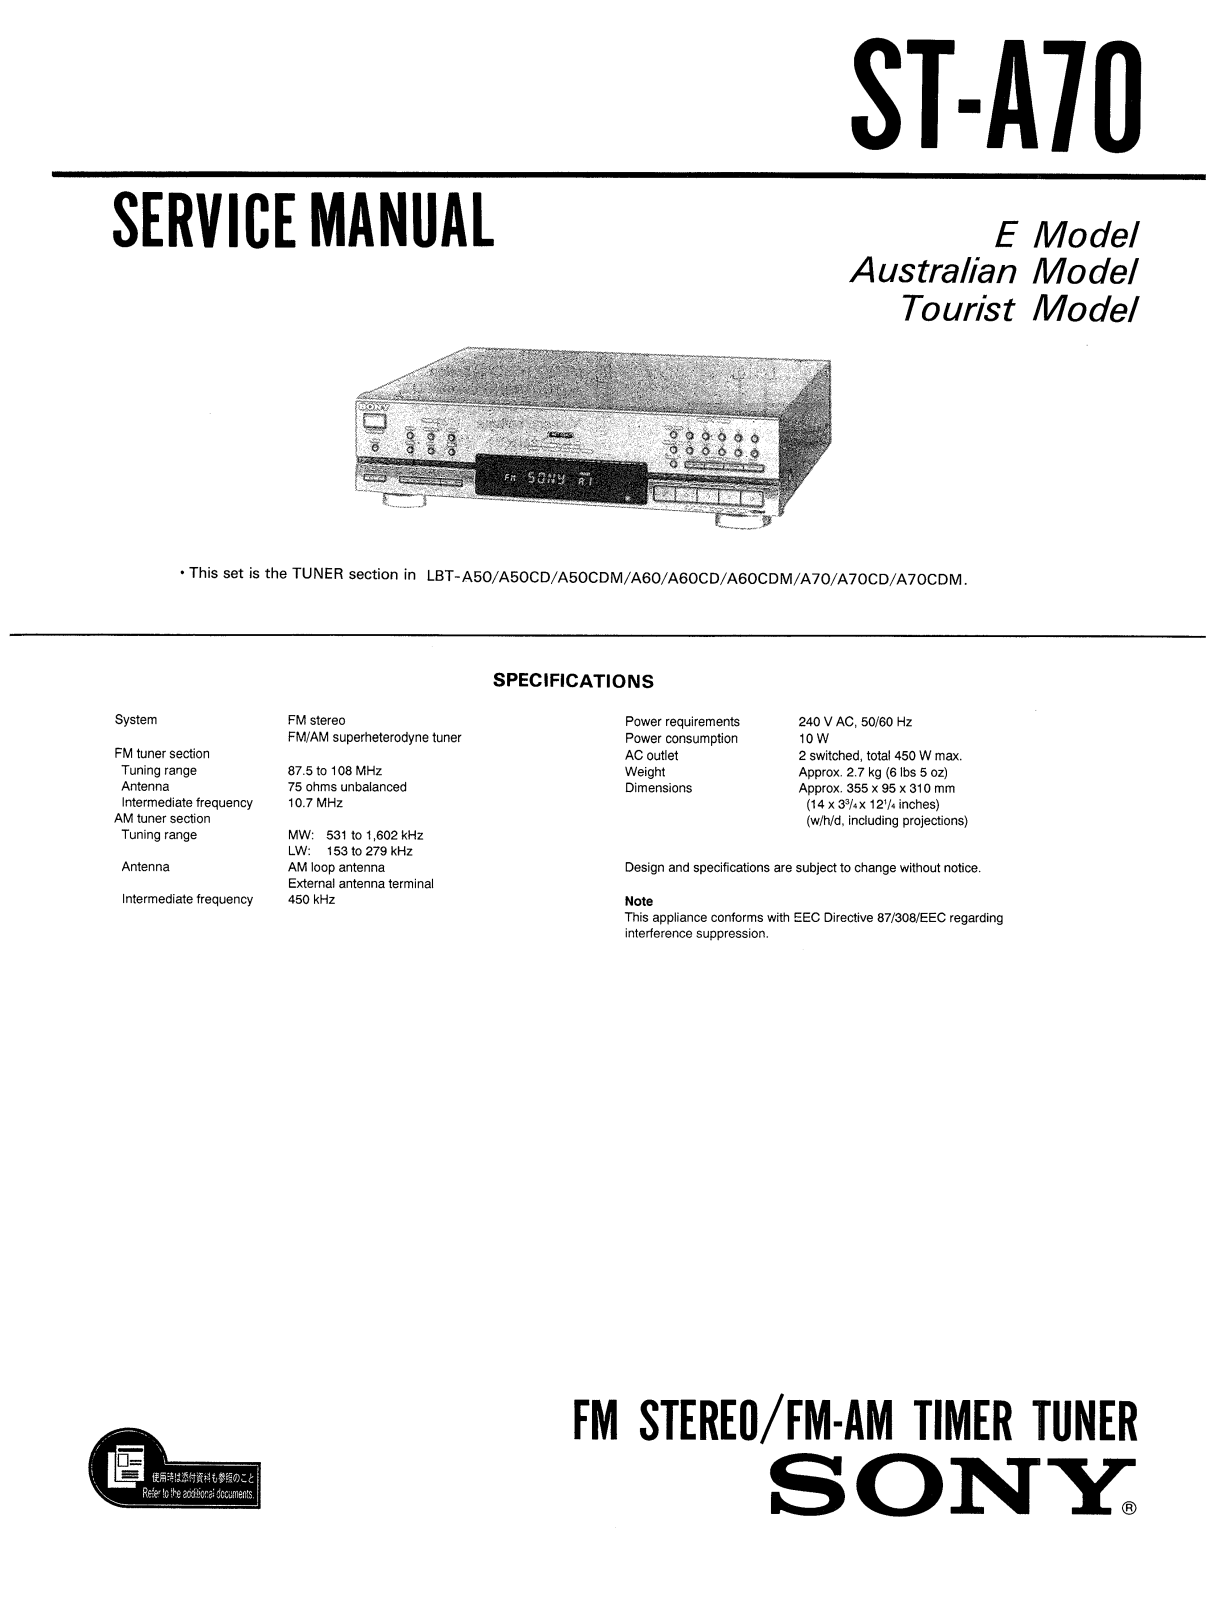 Sony STA-70 Service manual